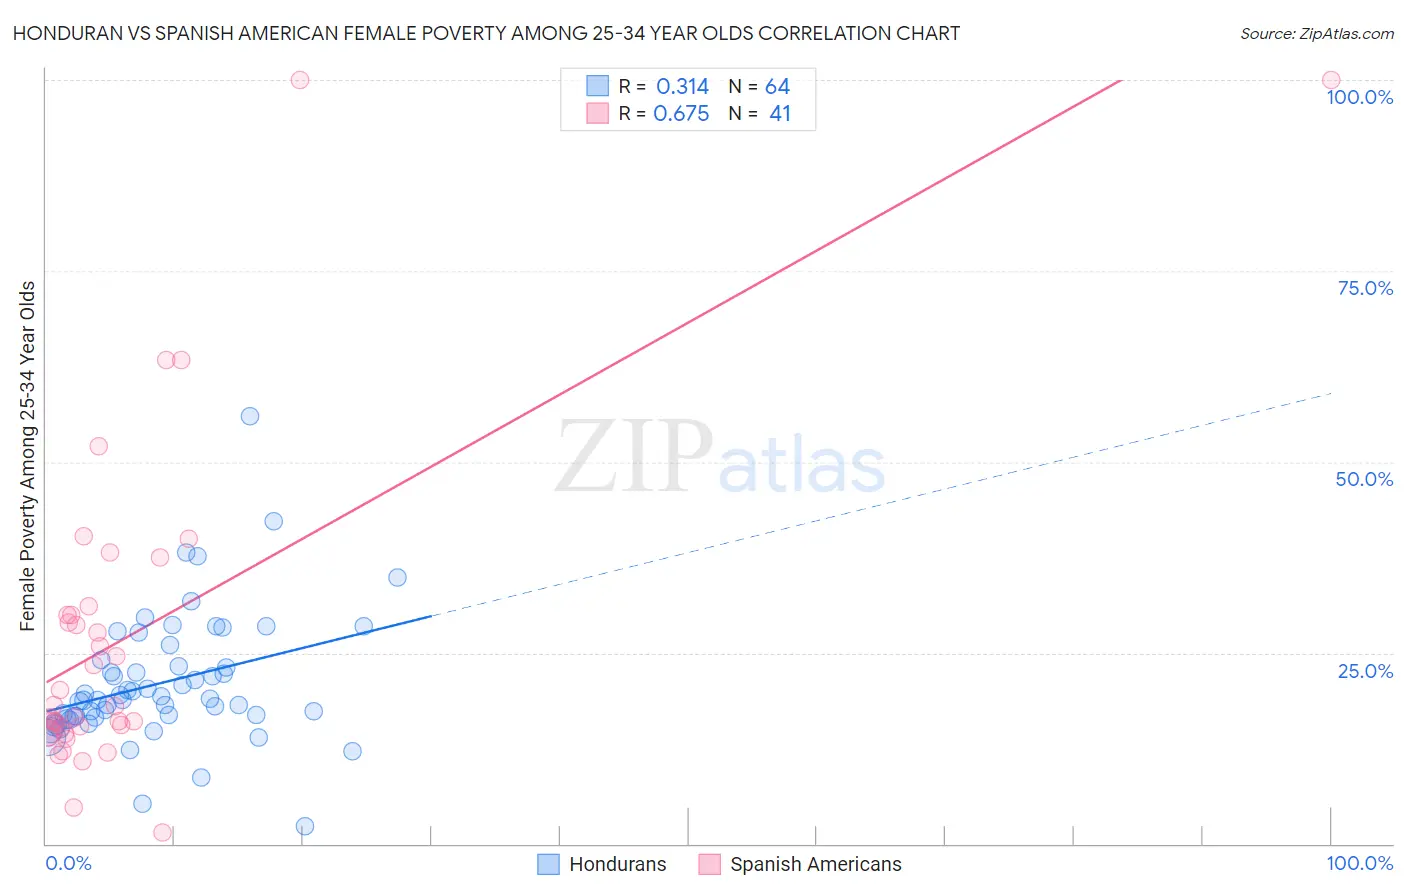 Honduran vs Spanish American Female Poverty Among 25-34 Year Olds